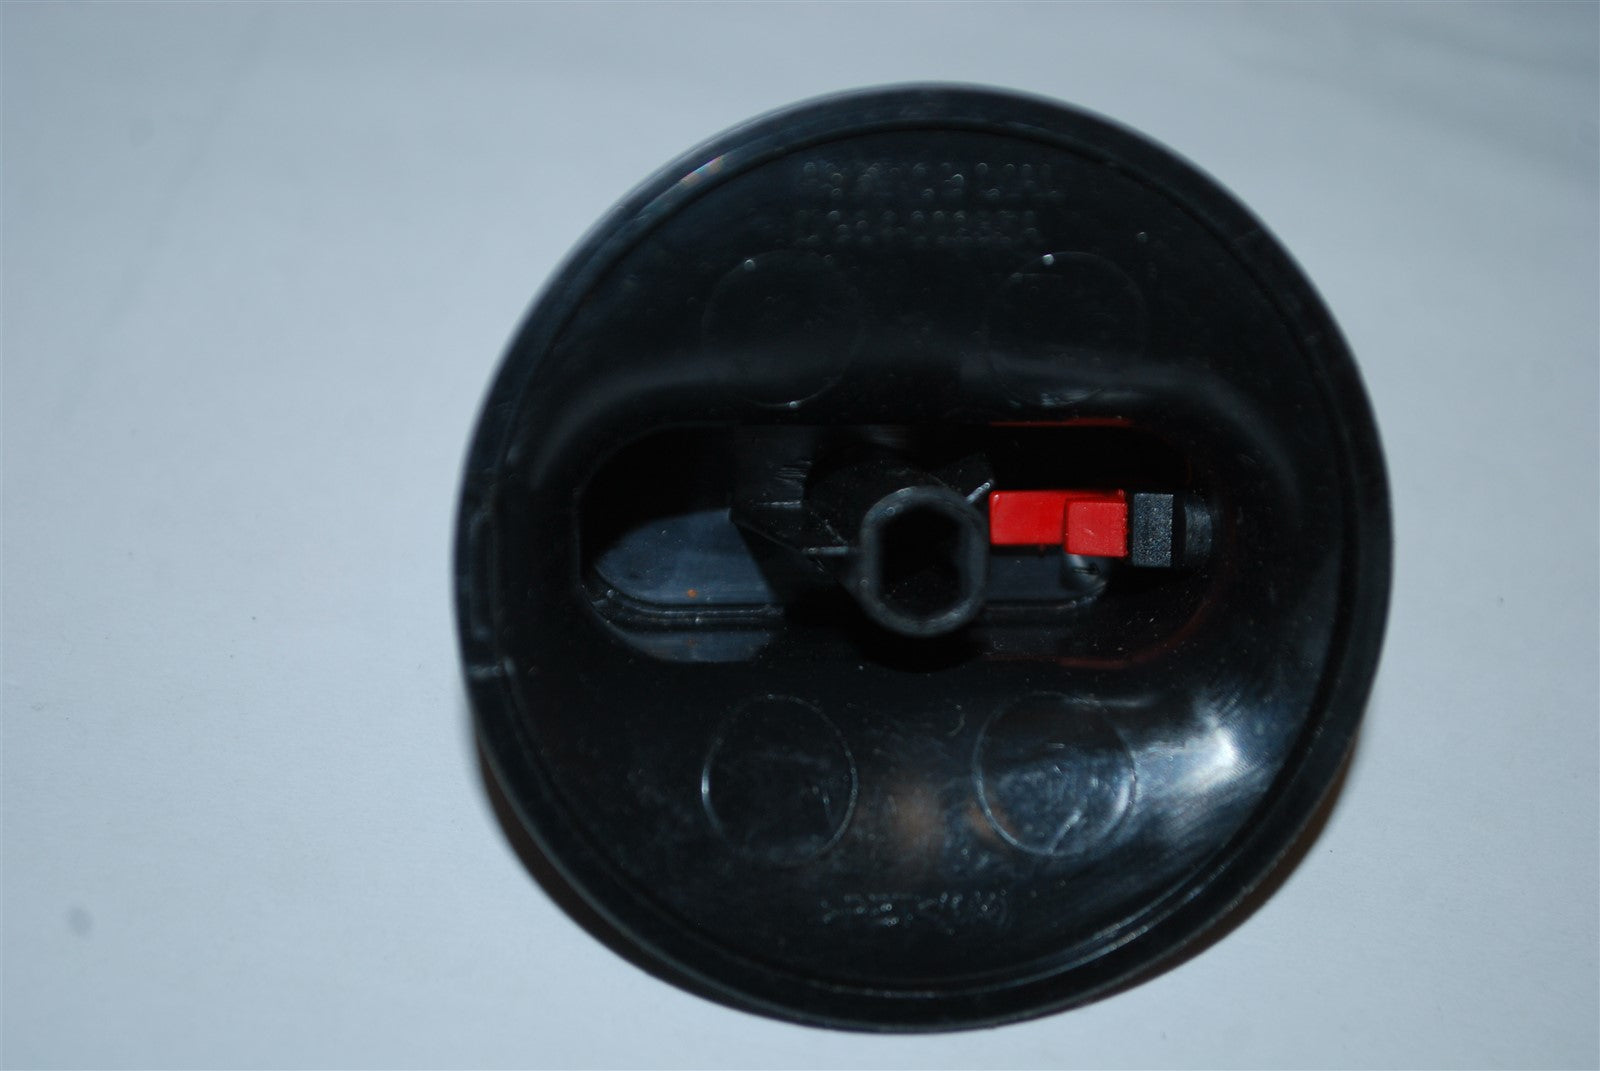 Samsung Range Oven Black A3 Knob Dial DG64-00235A